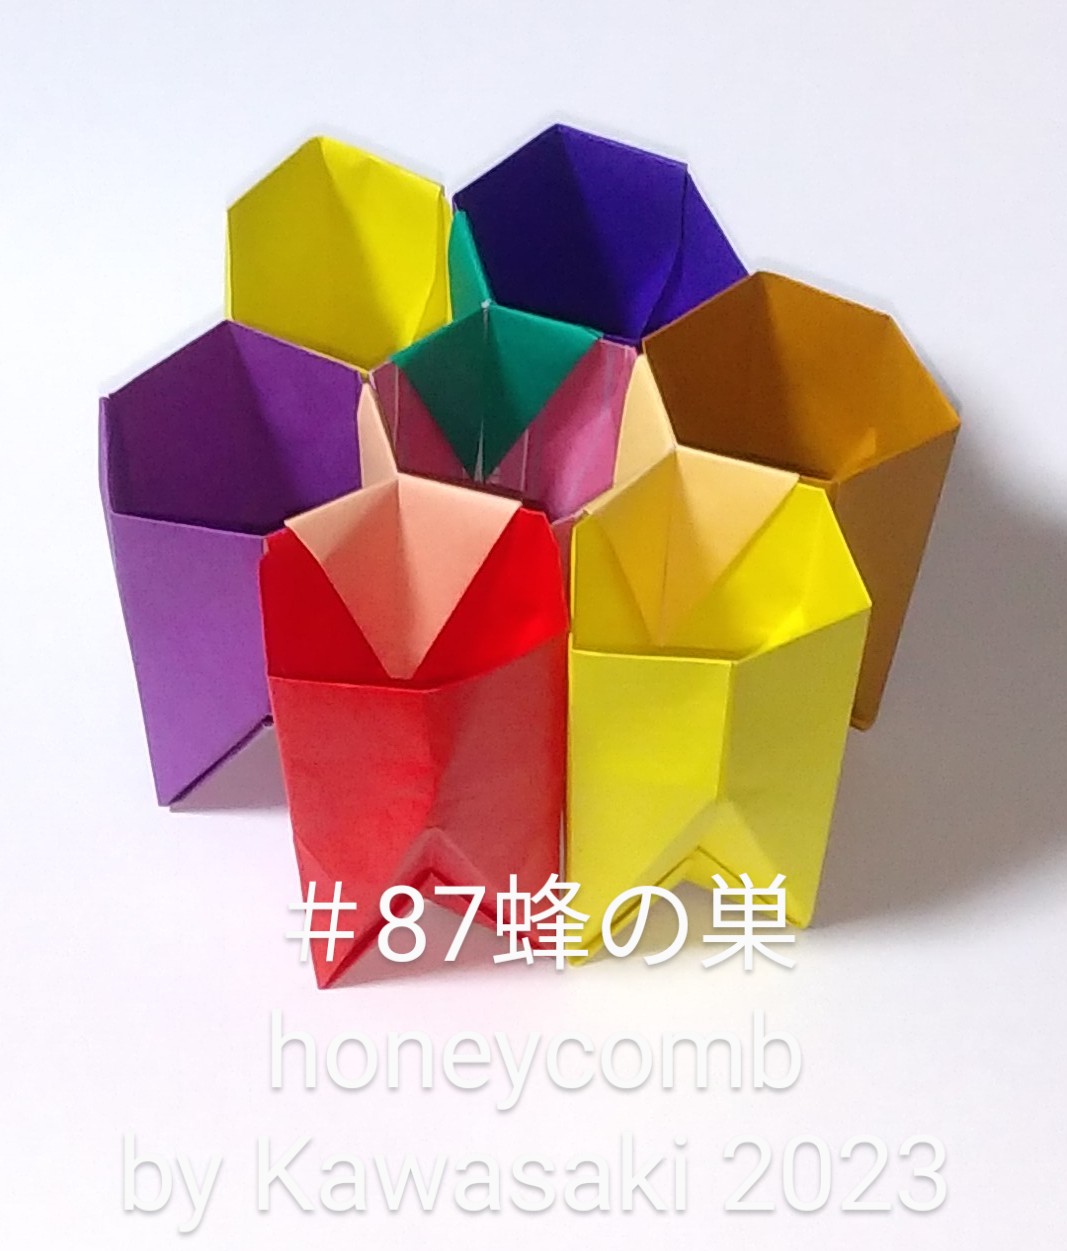 2023/09/29(Fri) 18:42「＃87蜂の巣 honeycomb  (作2023年9月28日18時頃)  」川崎敏和 T.Kawasaki
（創作者 Author：川崎敏和 T.Kawasaki,　製作者 Folder：川崎敏和 T.Kawasaki ,　出典 Source：2023年川崎敏和折り紙キット＃87）
 ＃84三足器を鶴の基本形で組んで蜂の巣にしました。